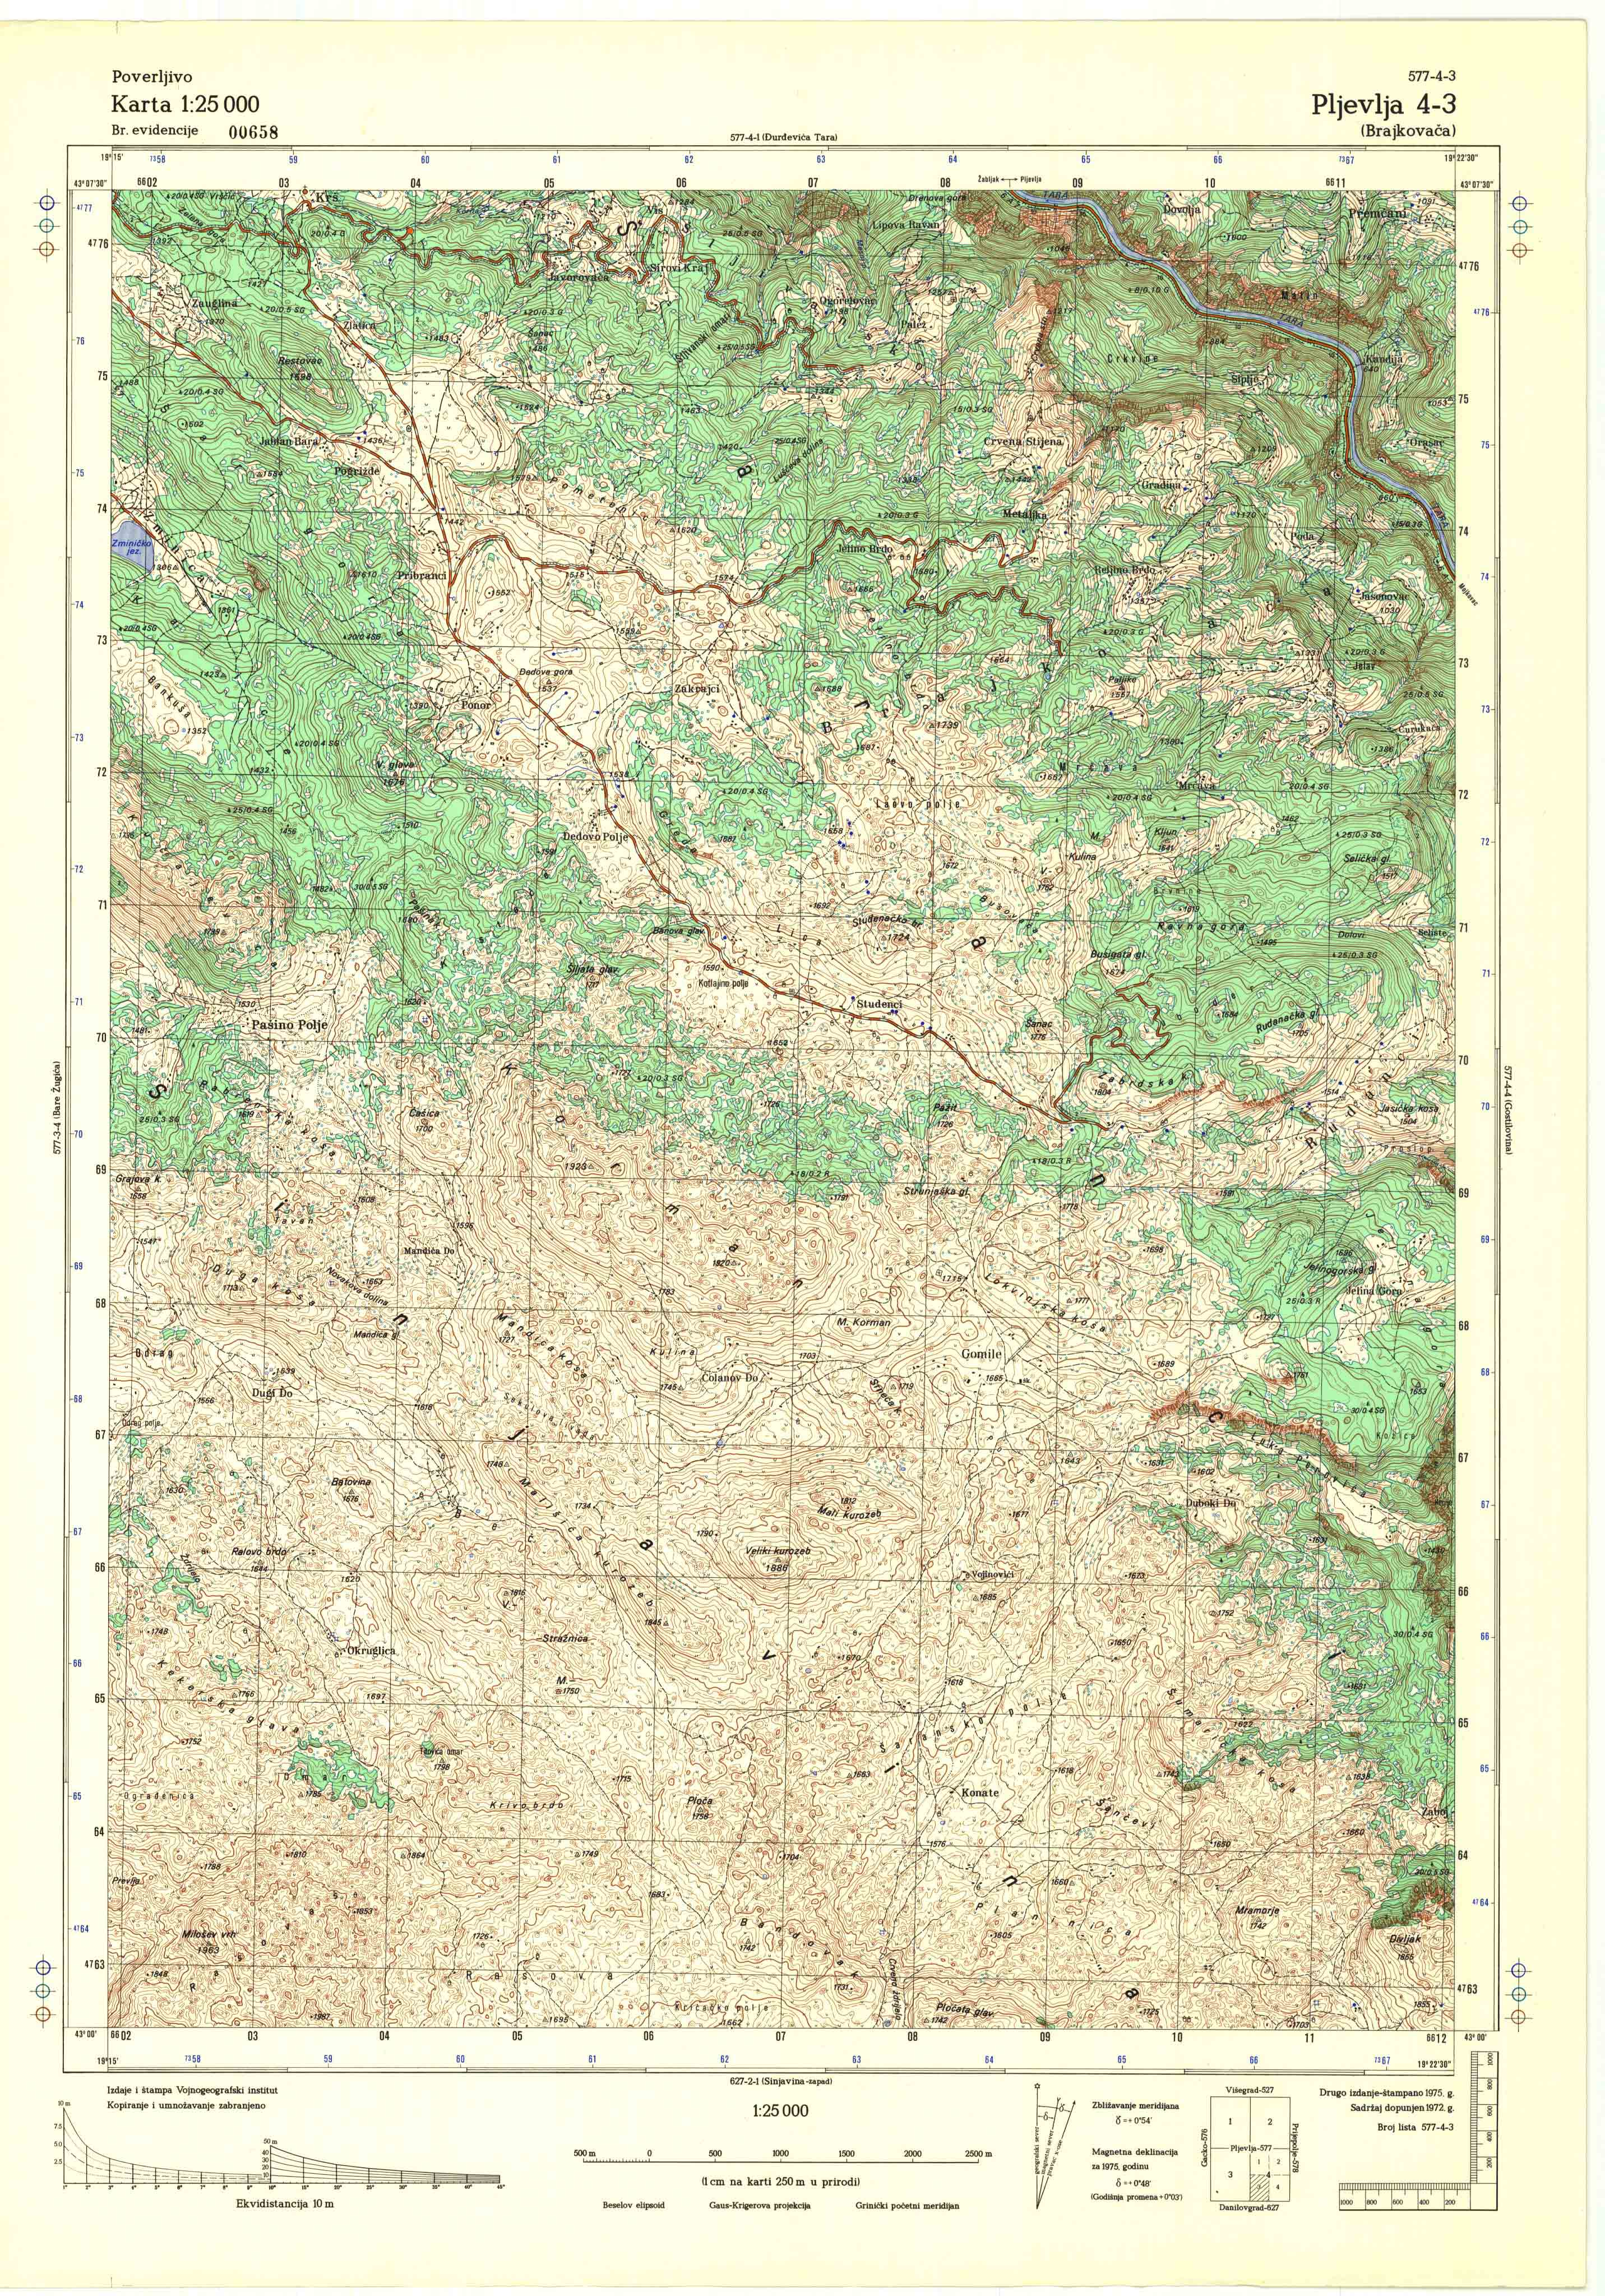  topografska karta srbije 25000 JNA  Pljevlja